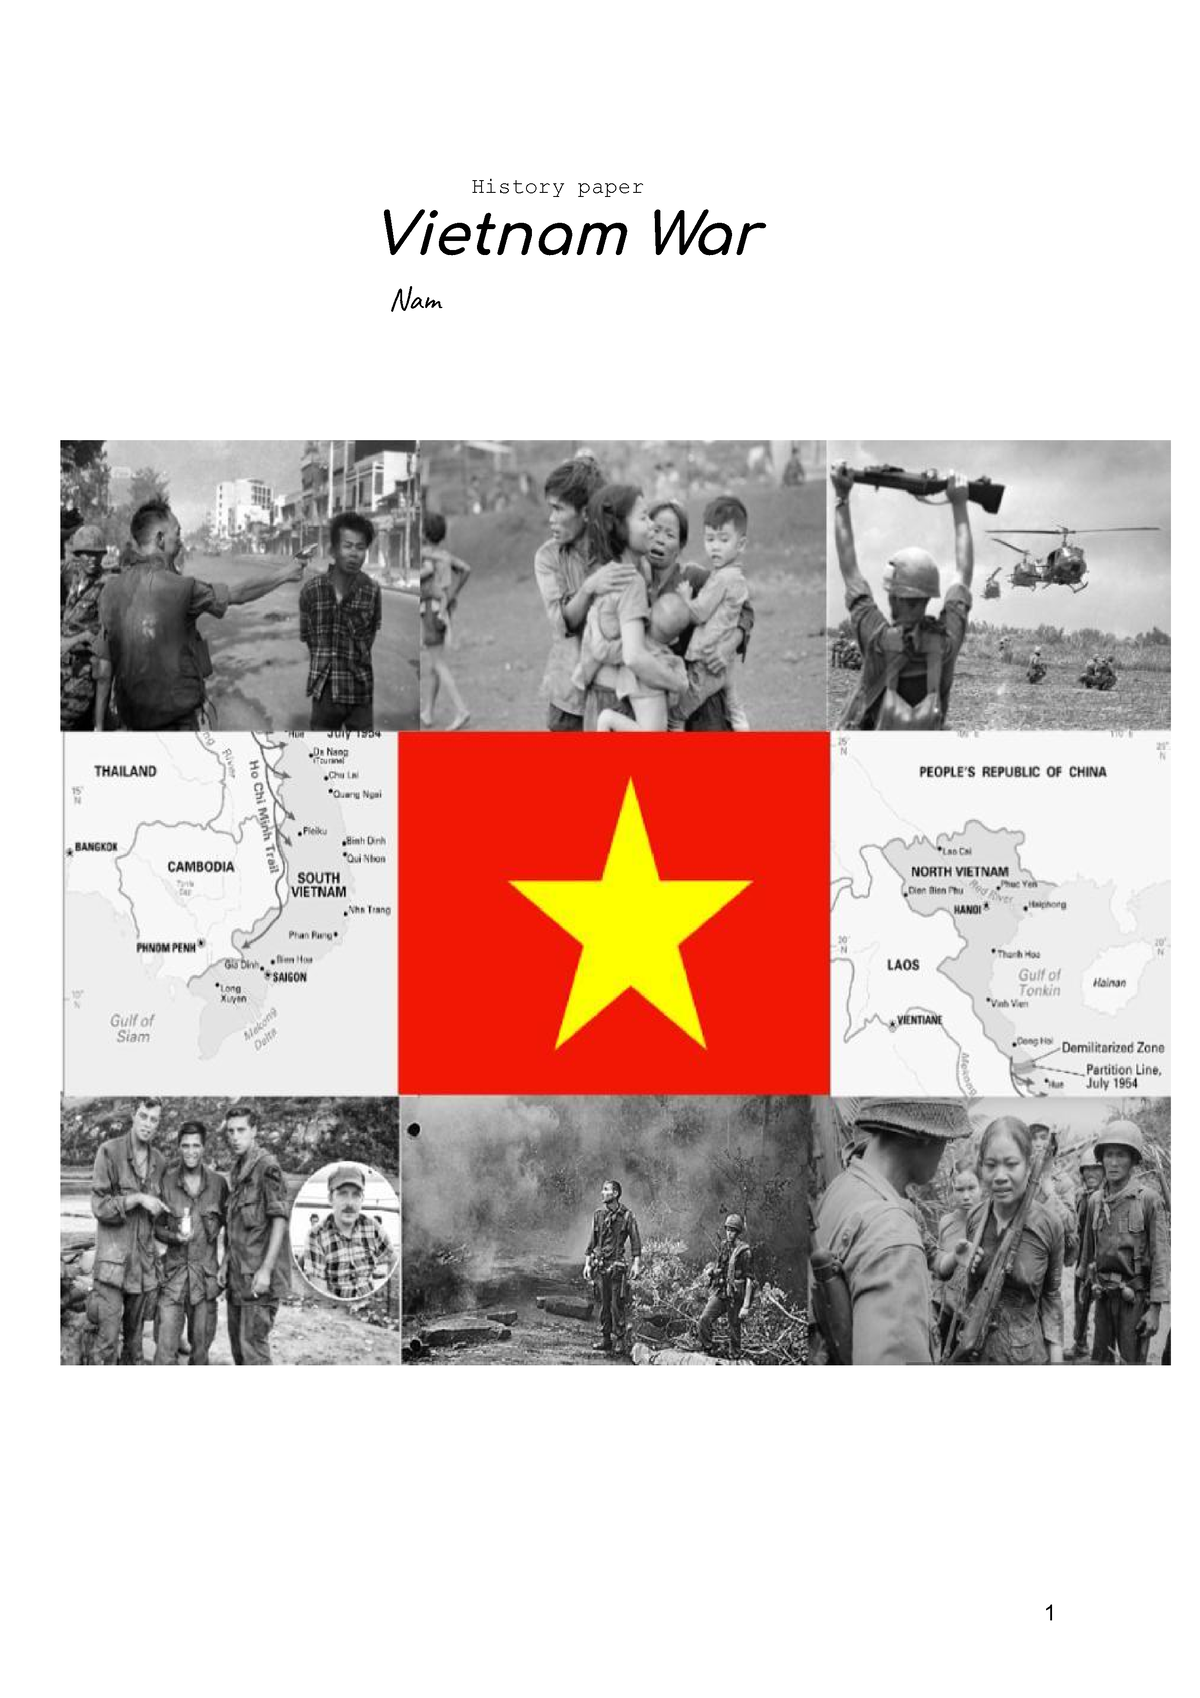 Vietnam war history paper - History paper Vietnam War Nam Content ❏  Introduction (p. 3) ❏ - Studocu